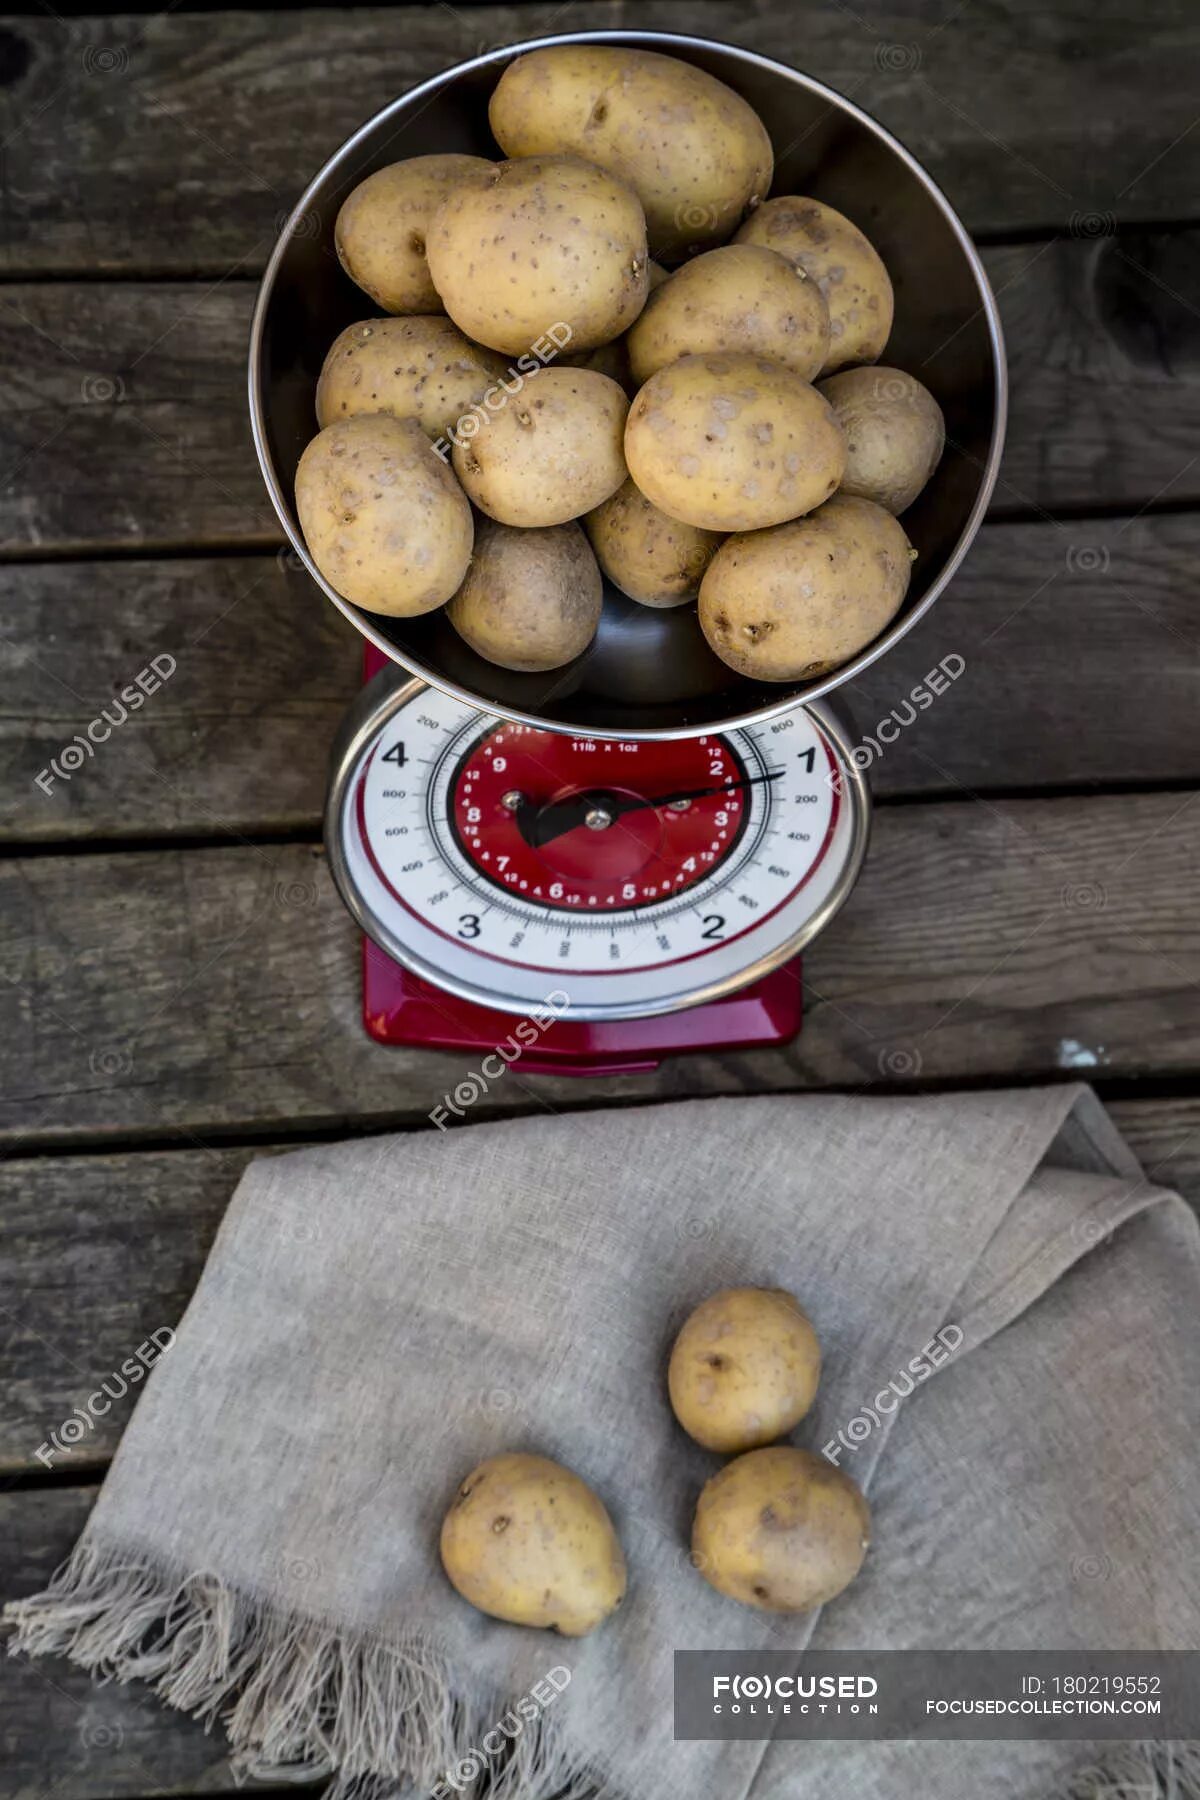 Килограмм картофеля. 1 Кг картошки. Картофель, 1 кг. Два кг картошки это.